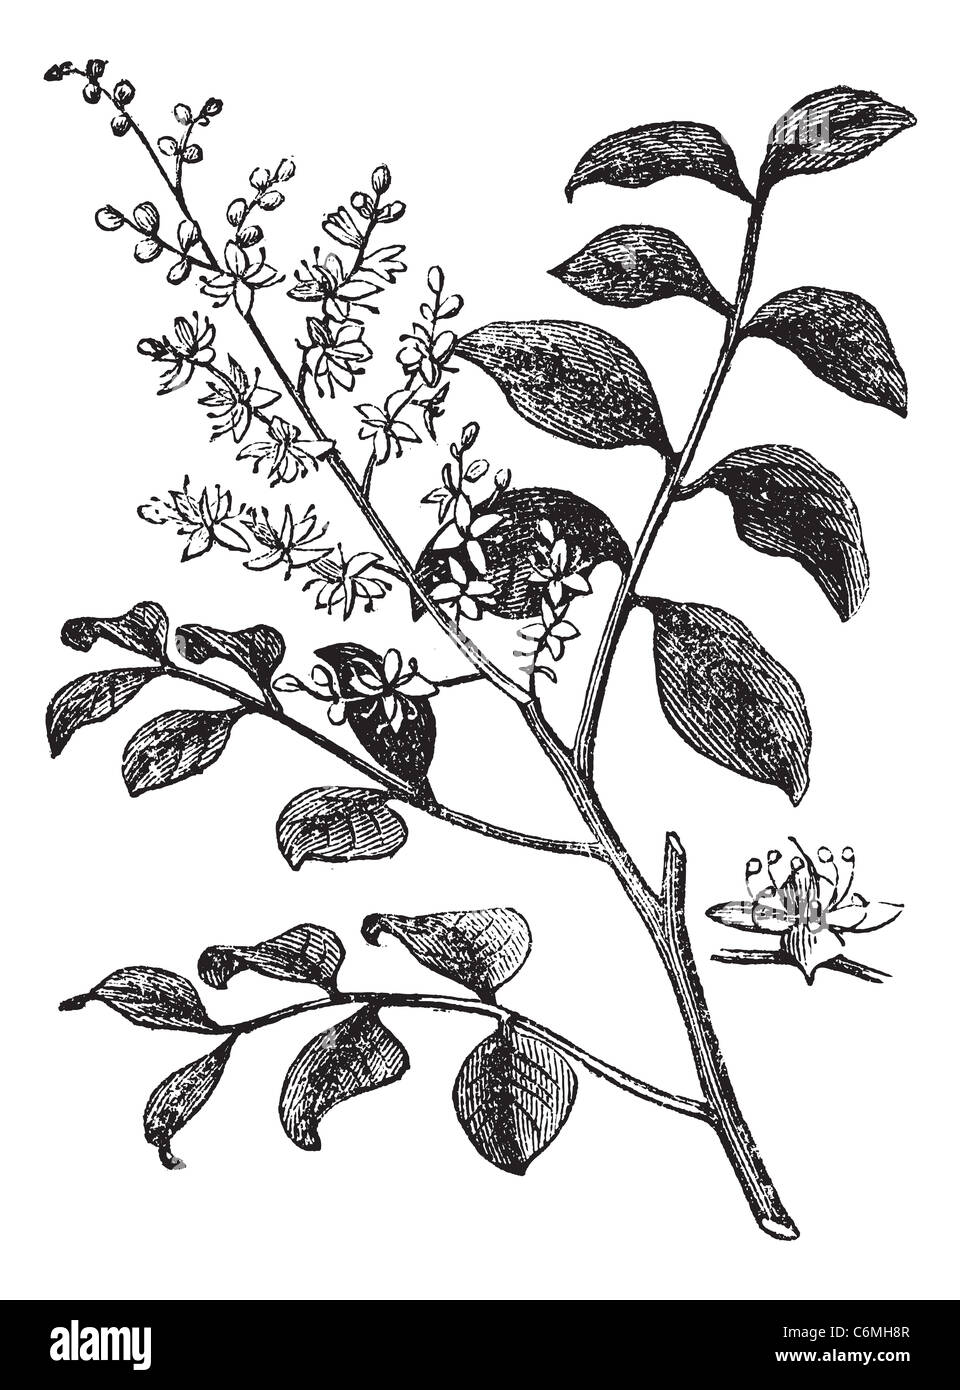 Diesel Tree or Kerosene Tree or Kupa'y or Cabismo or Copauva Cabimo or Copaifera sp., vintage engraving. Old engraved illustrati Stock Photo